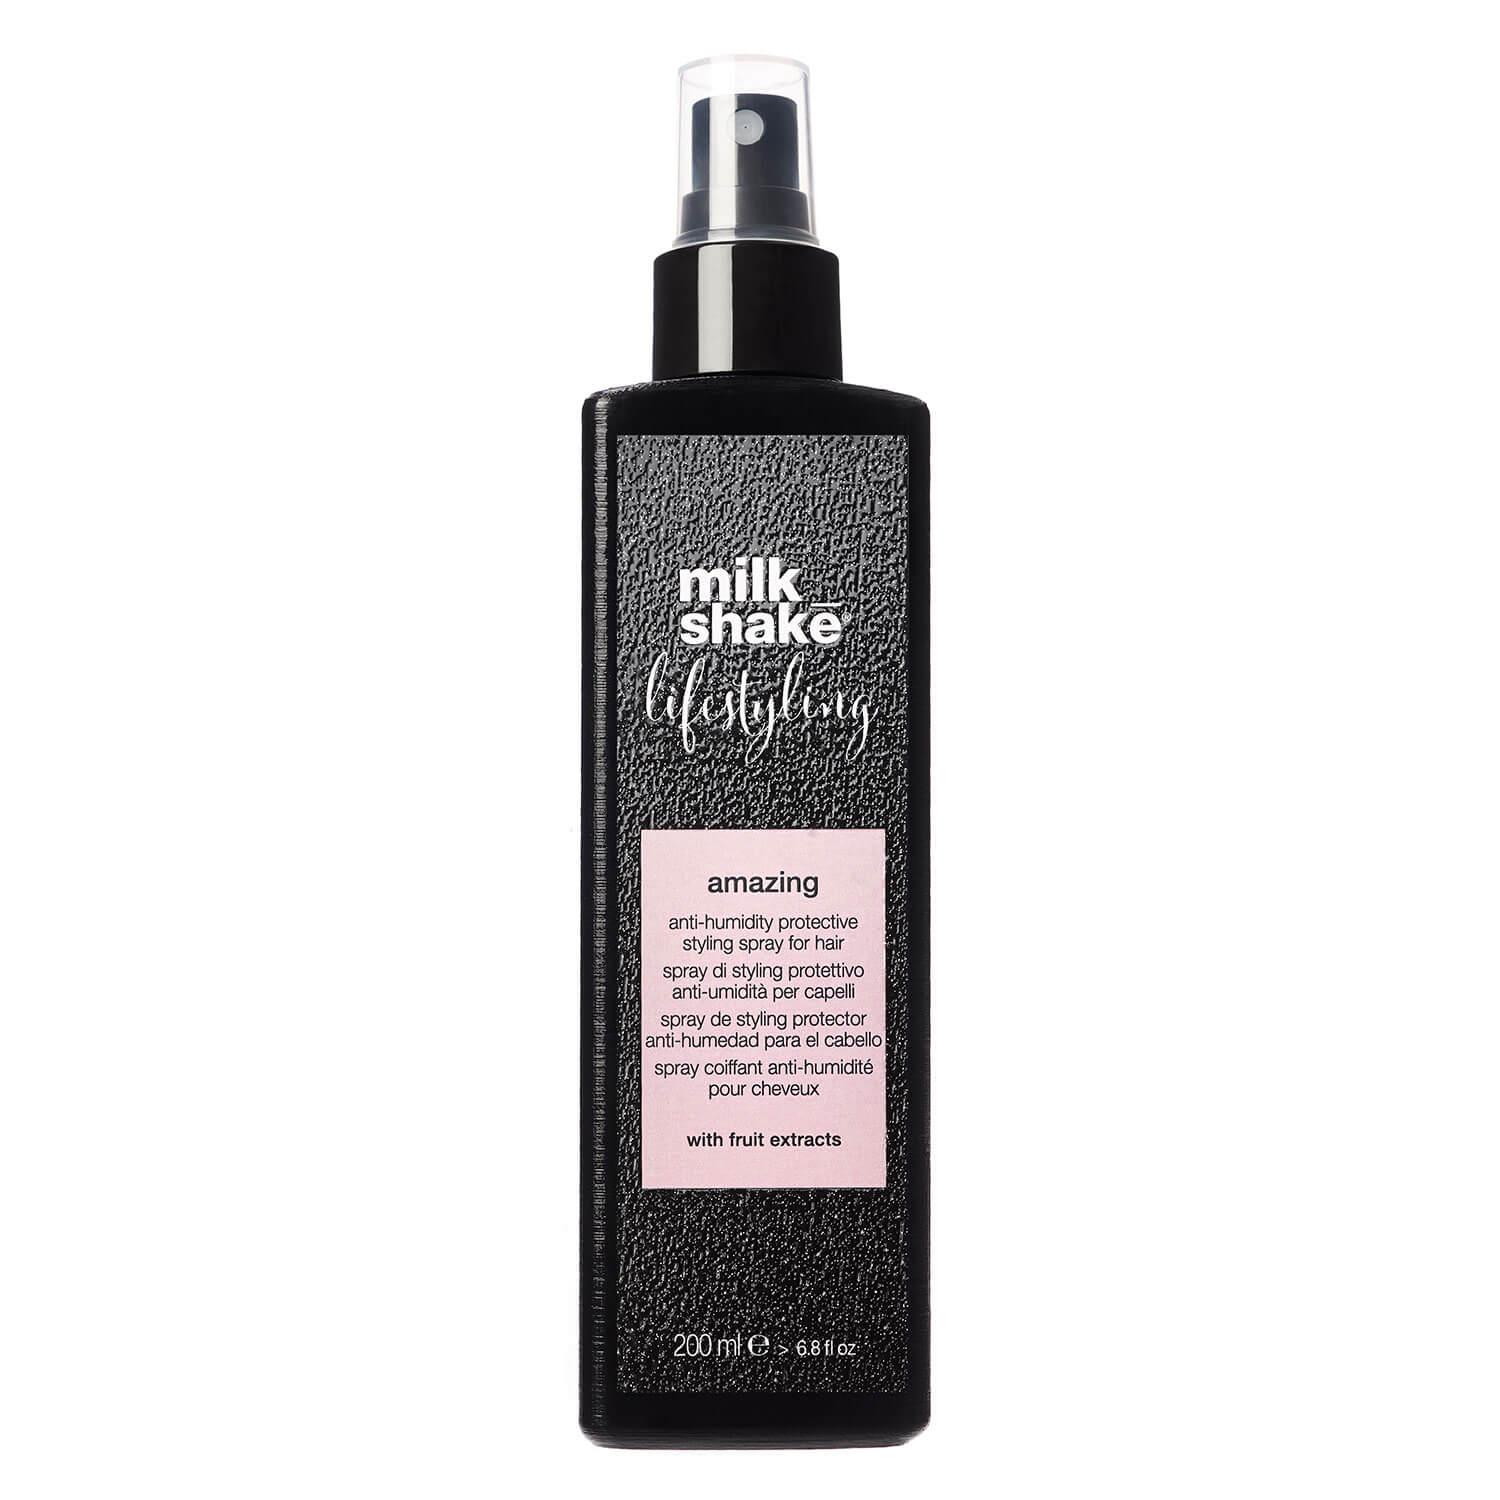 milk_shake lifestyling - amazing anti-humidity protective styling spray